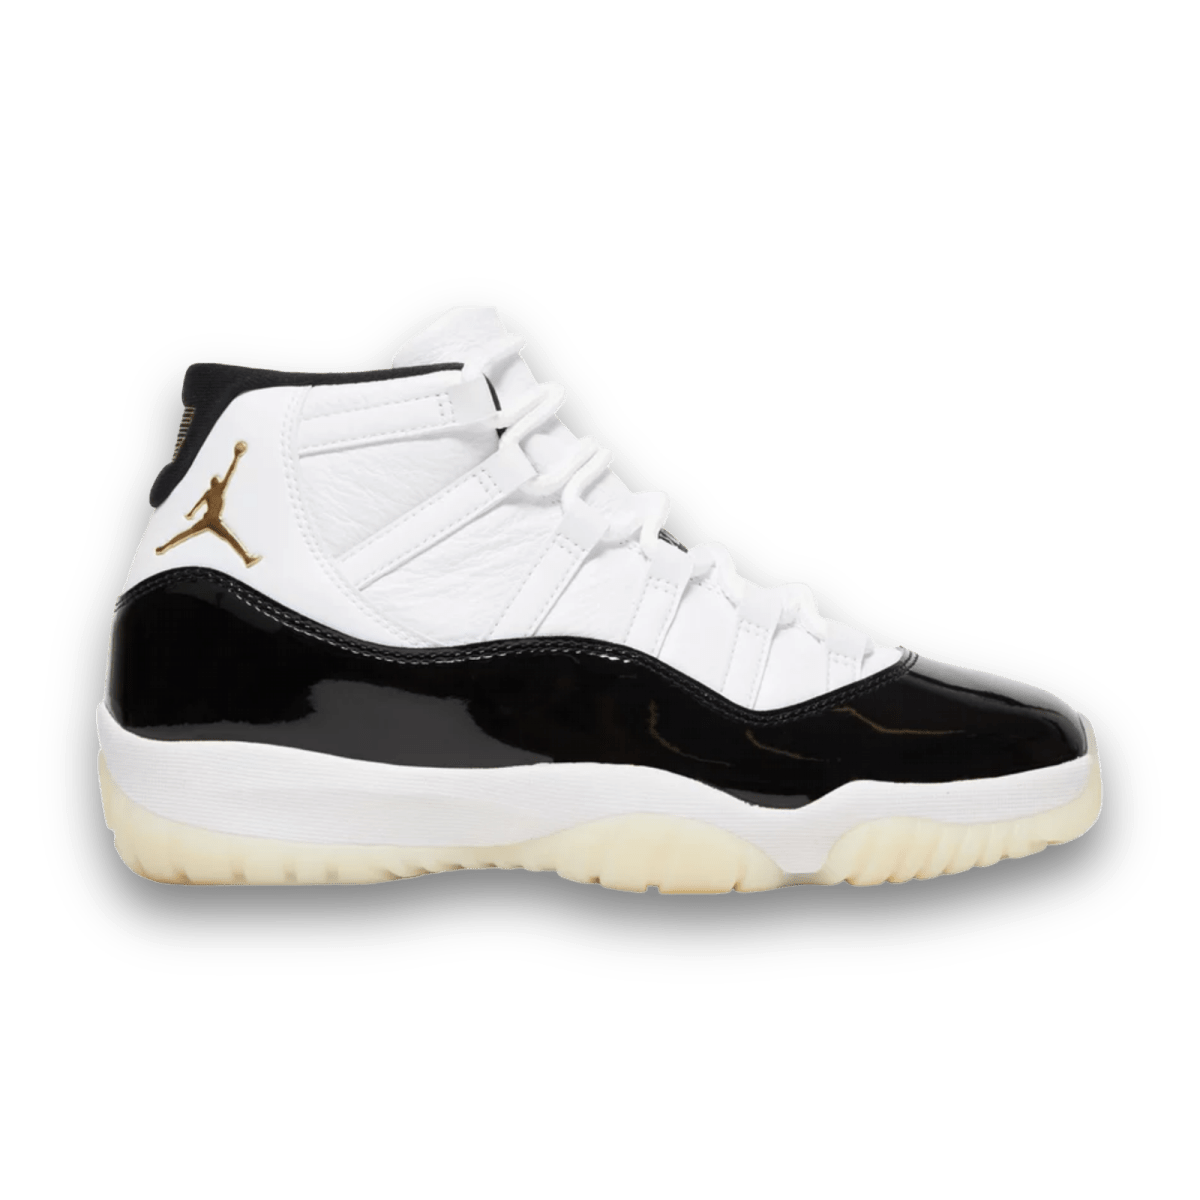 Air Jordan 11 Retro 'Gratitude / Defining Moments' - High Sneaker - Jawns on Fire Sneakers & Streetwear